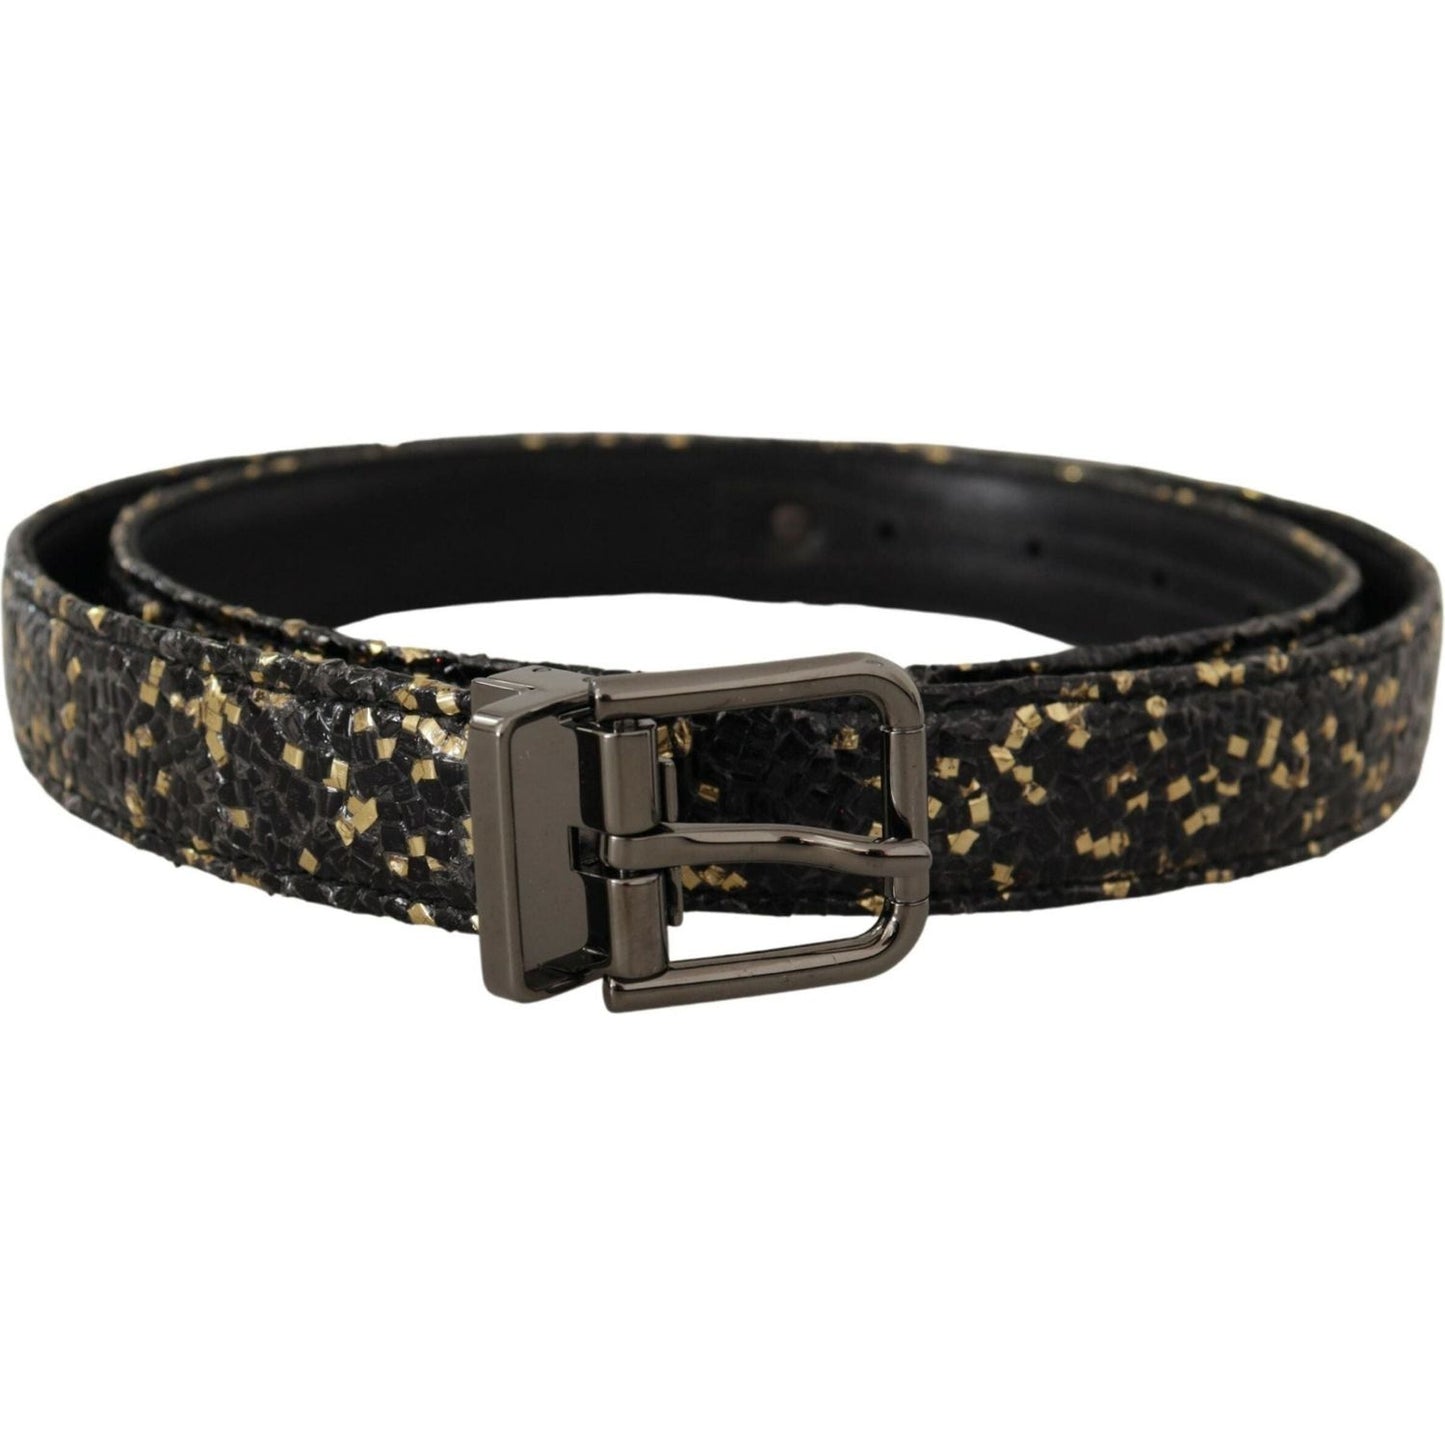 Elegant Italian Leather Belt with Crown Detail